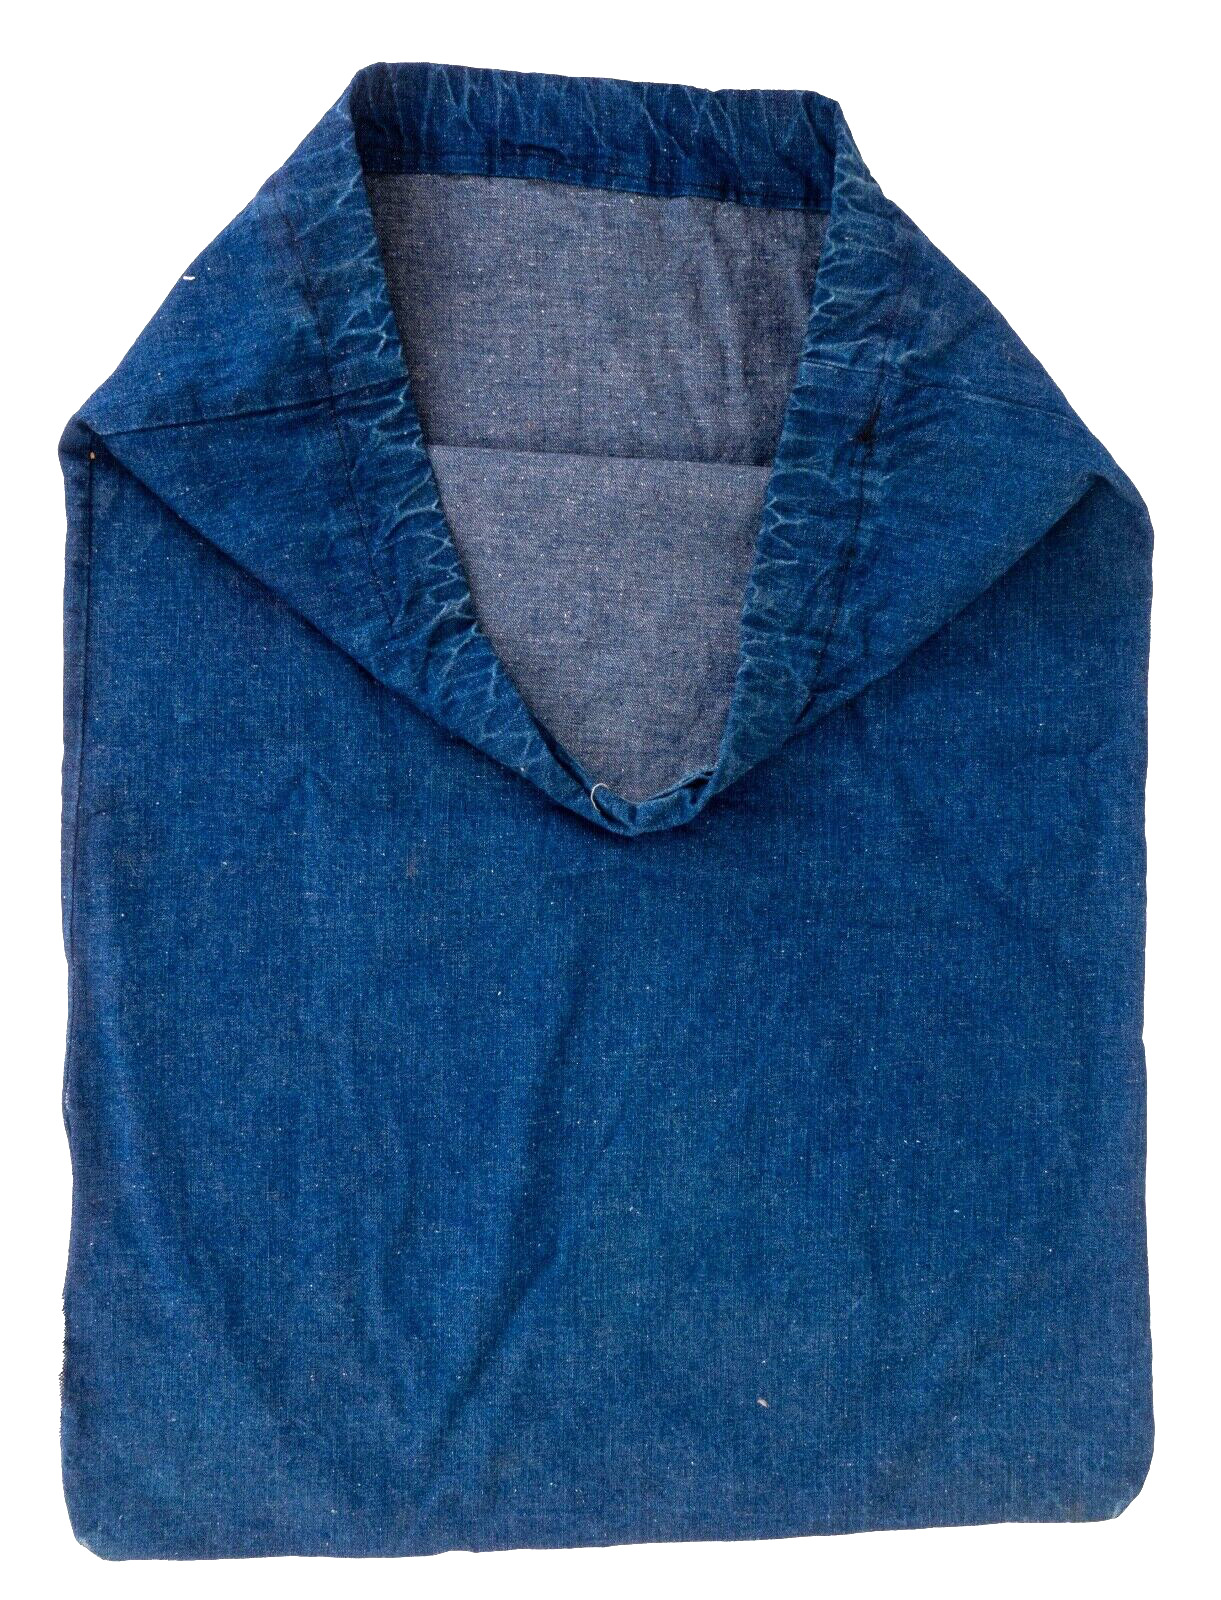 Vintage Redline Selvedge Denim Laundry Bag WWII Era One or Two Wash Dark Blue